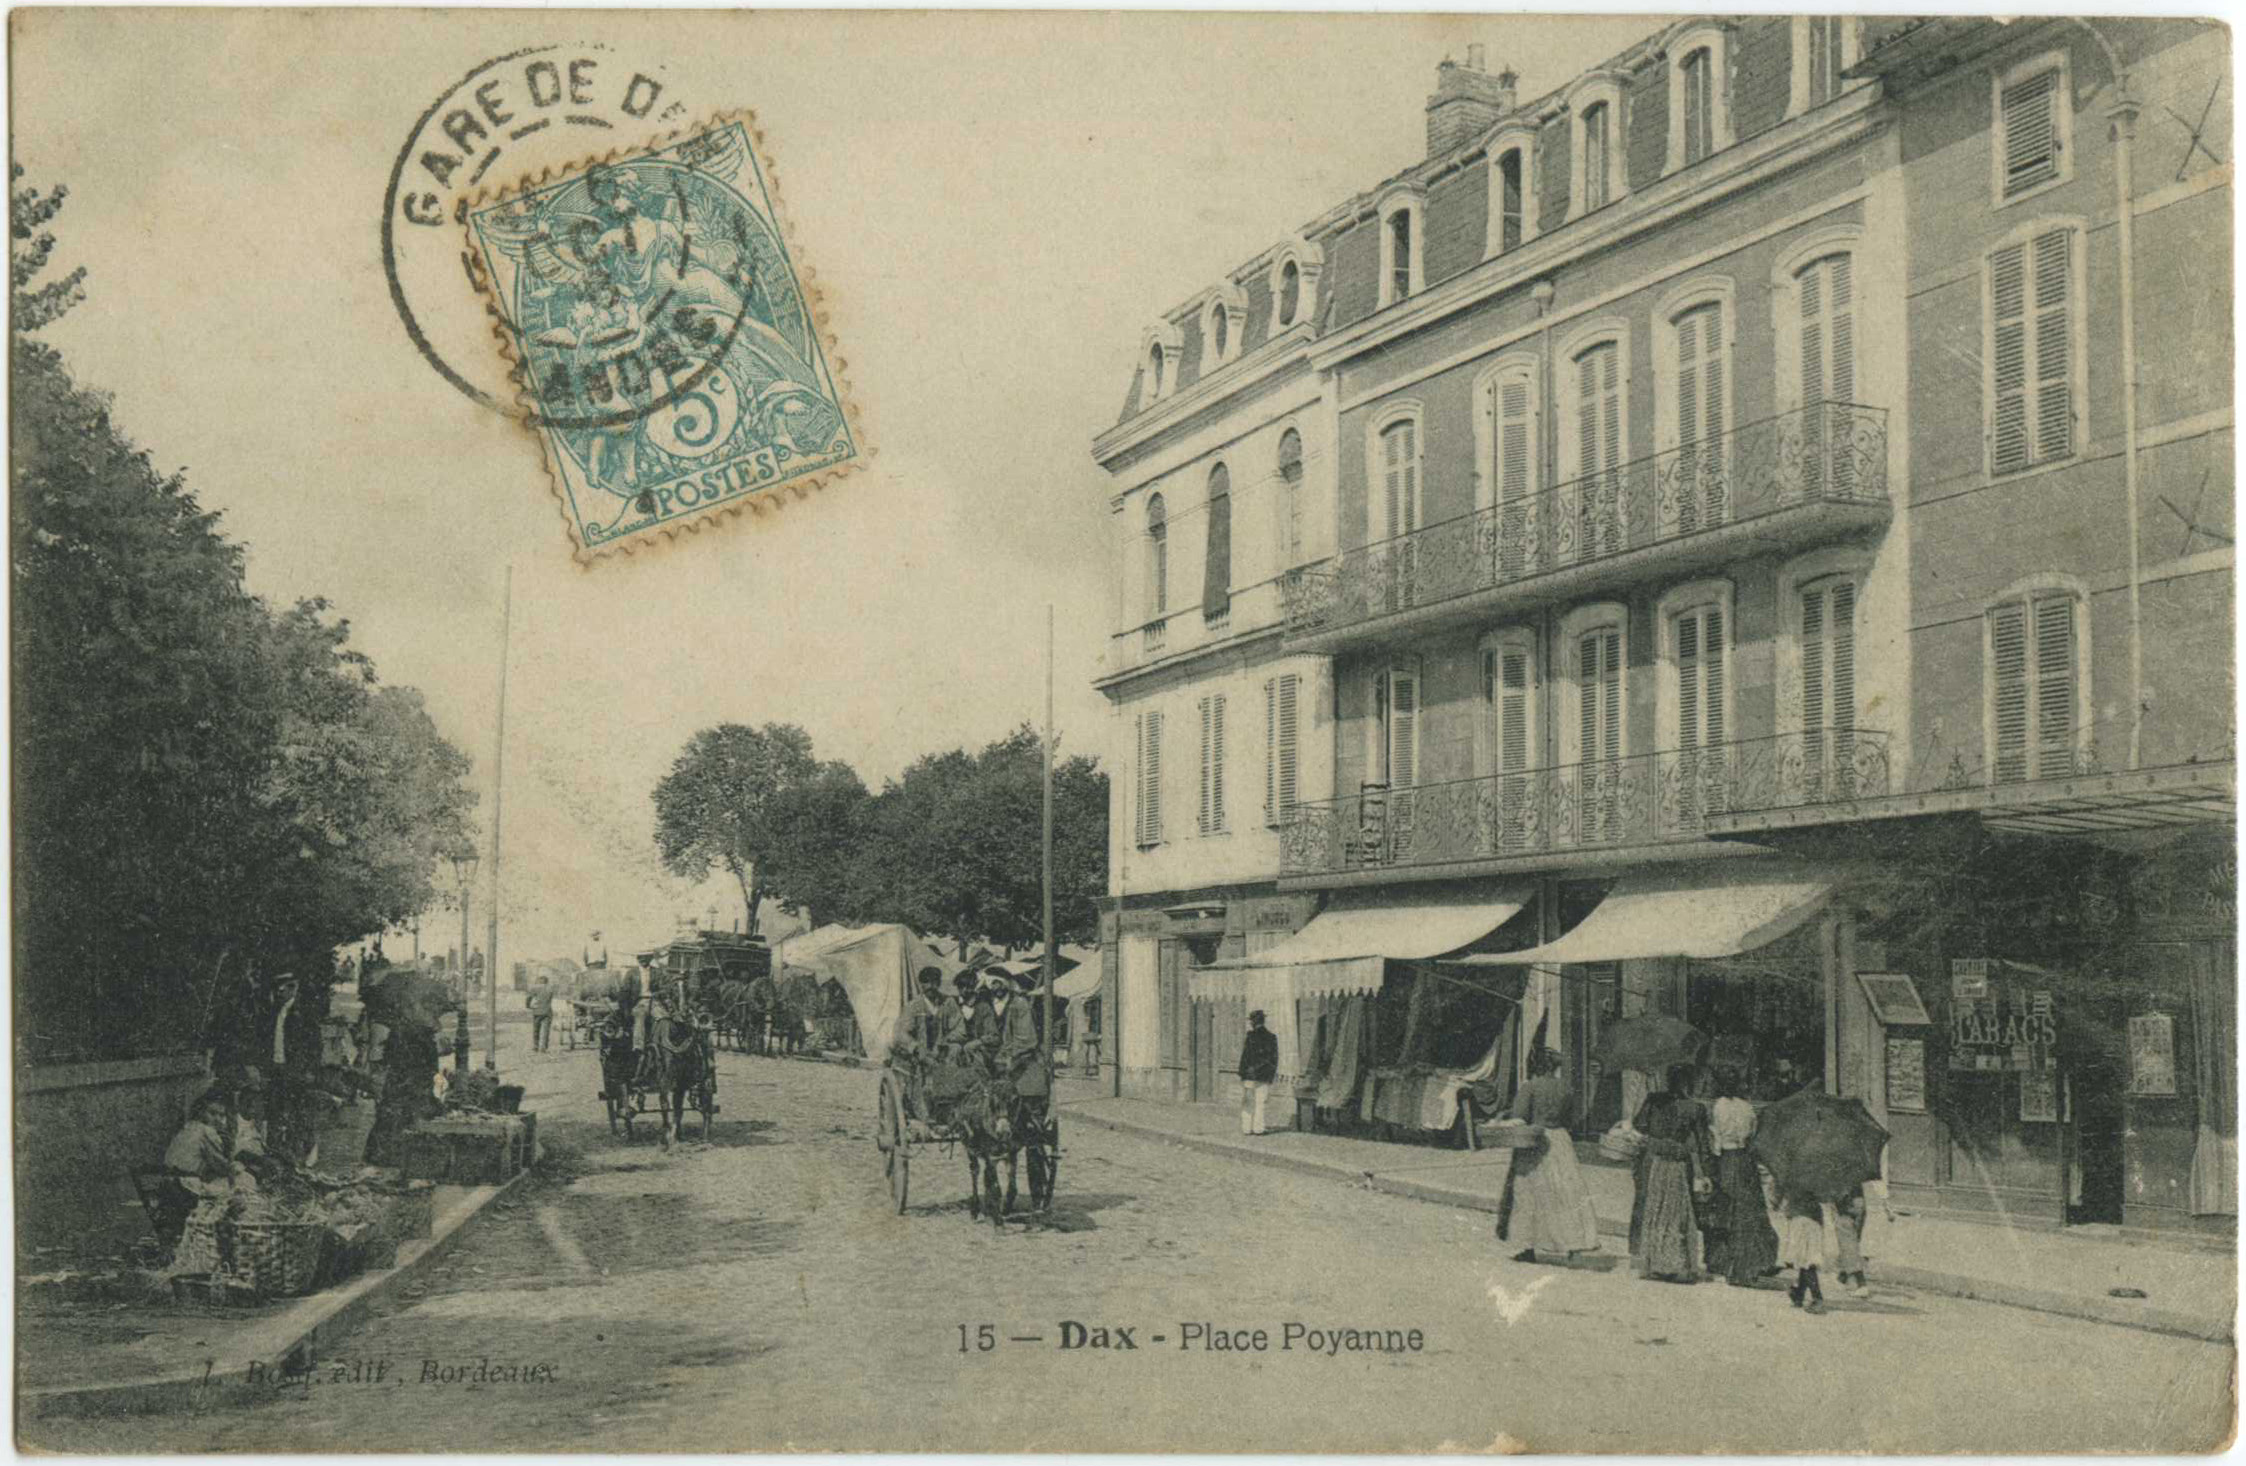 Dax - Place Poyanne